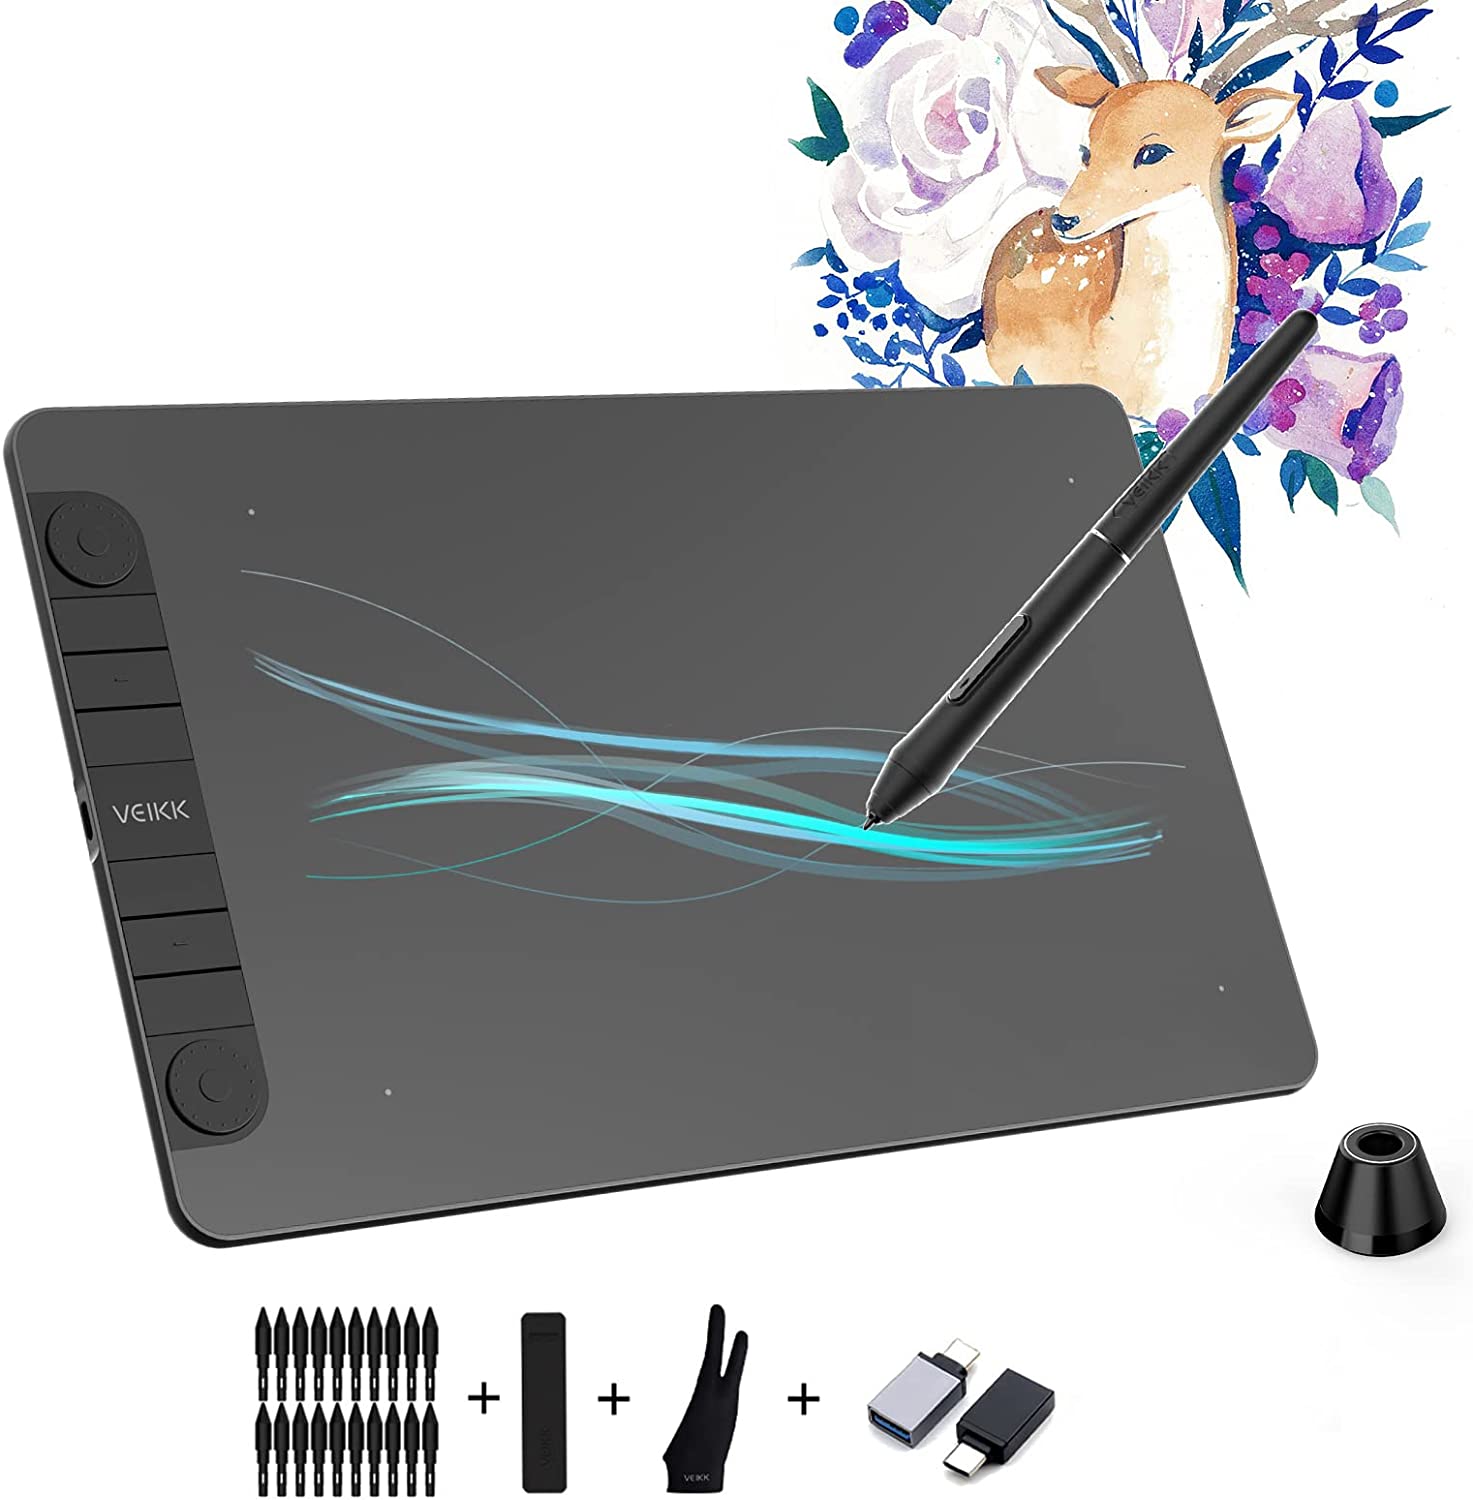 تبلت طراحی ویک VEIKK Drawing Tablet مدل VK1060 Pro Pen - ارسال ۱۰ الی ۱۵ روز کاری